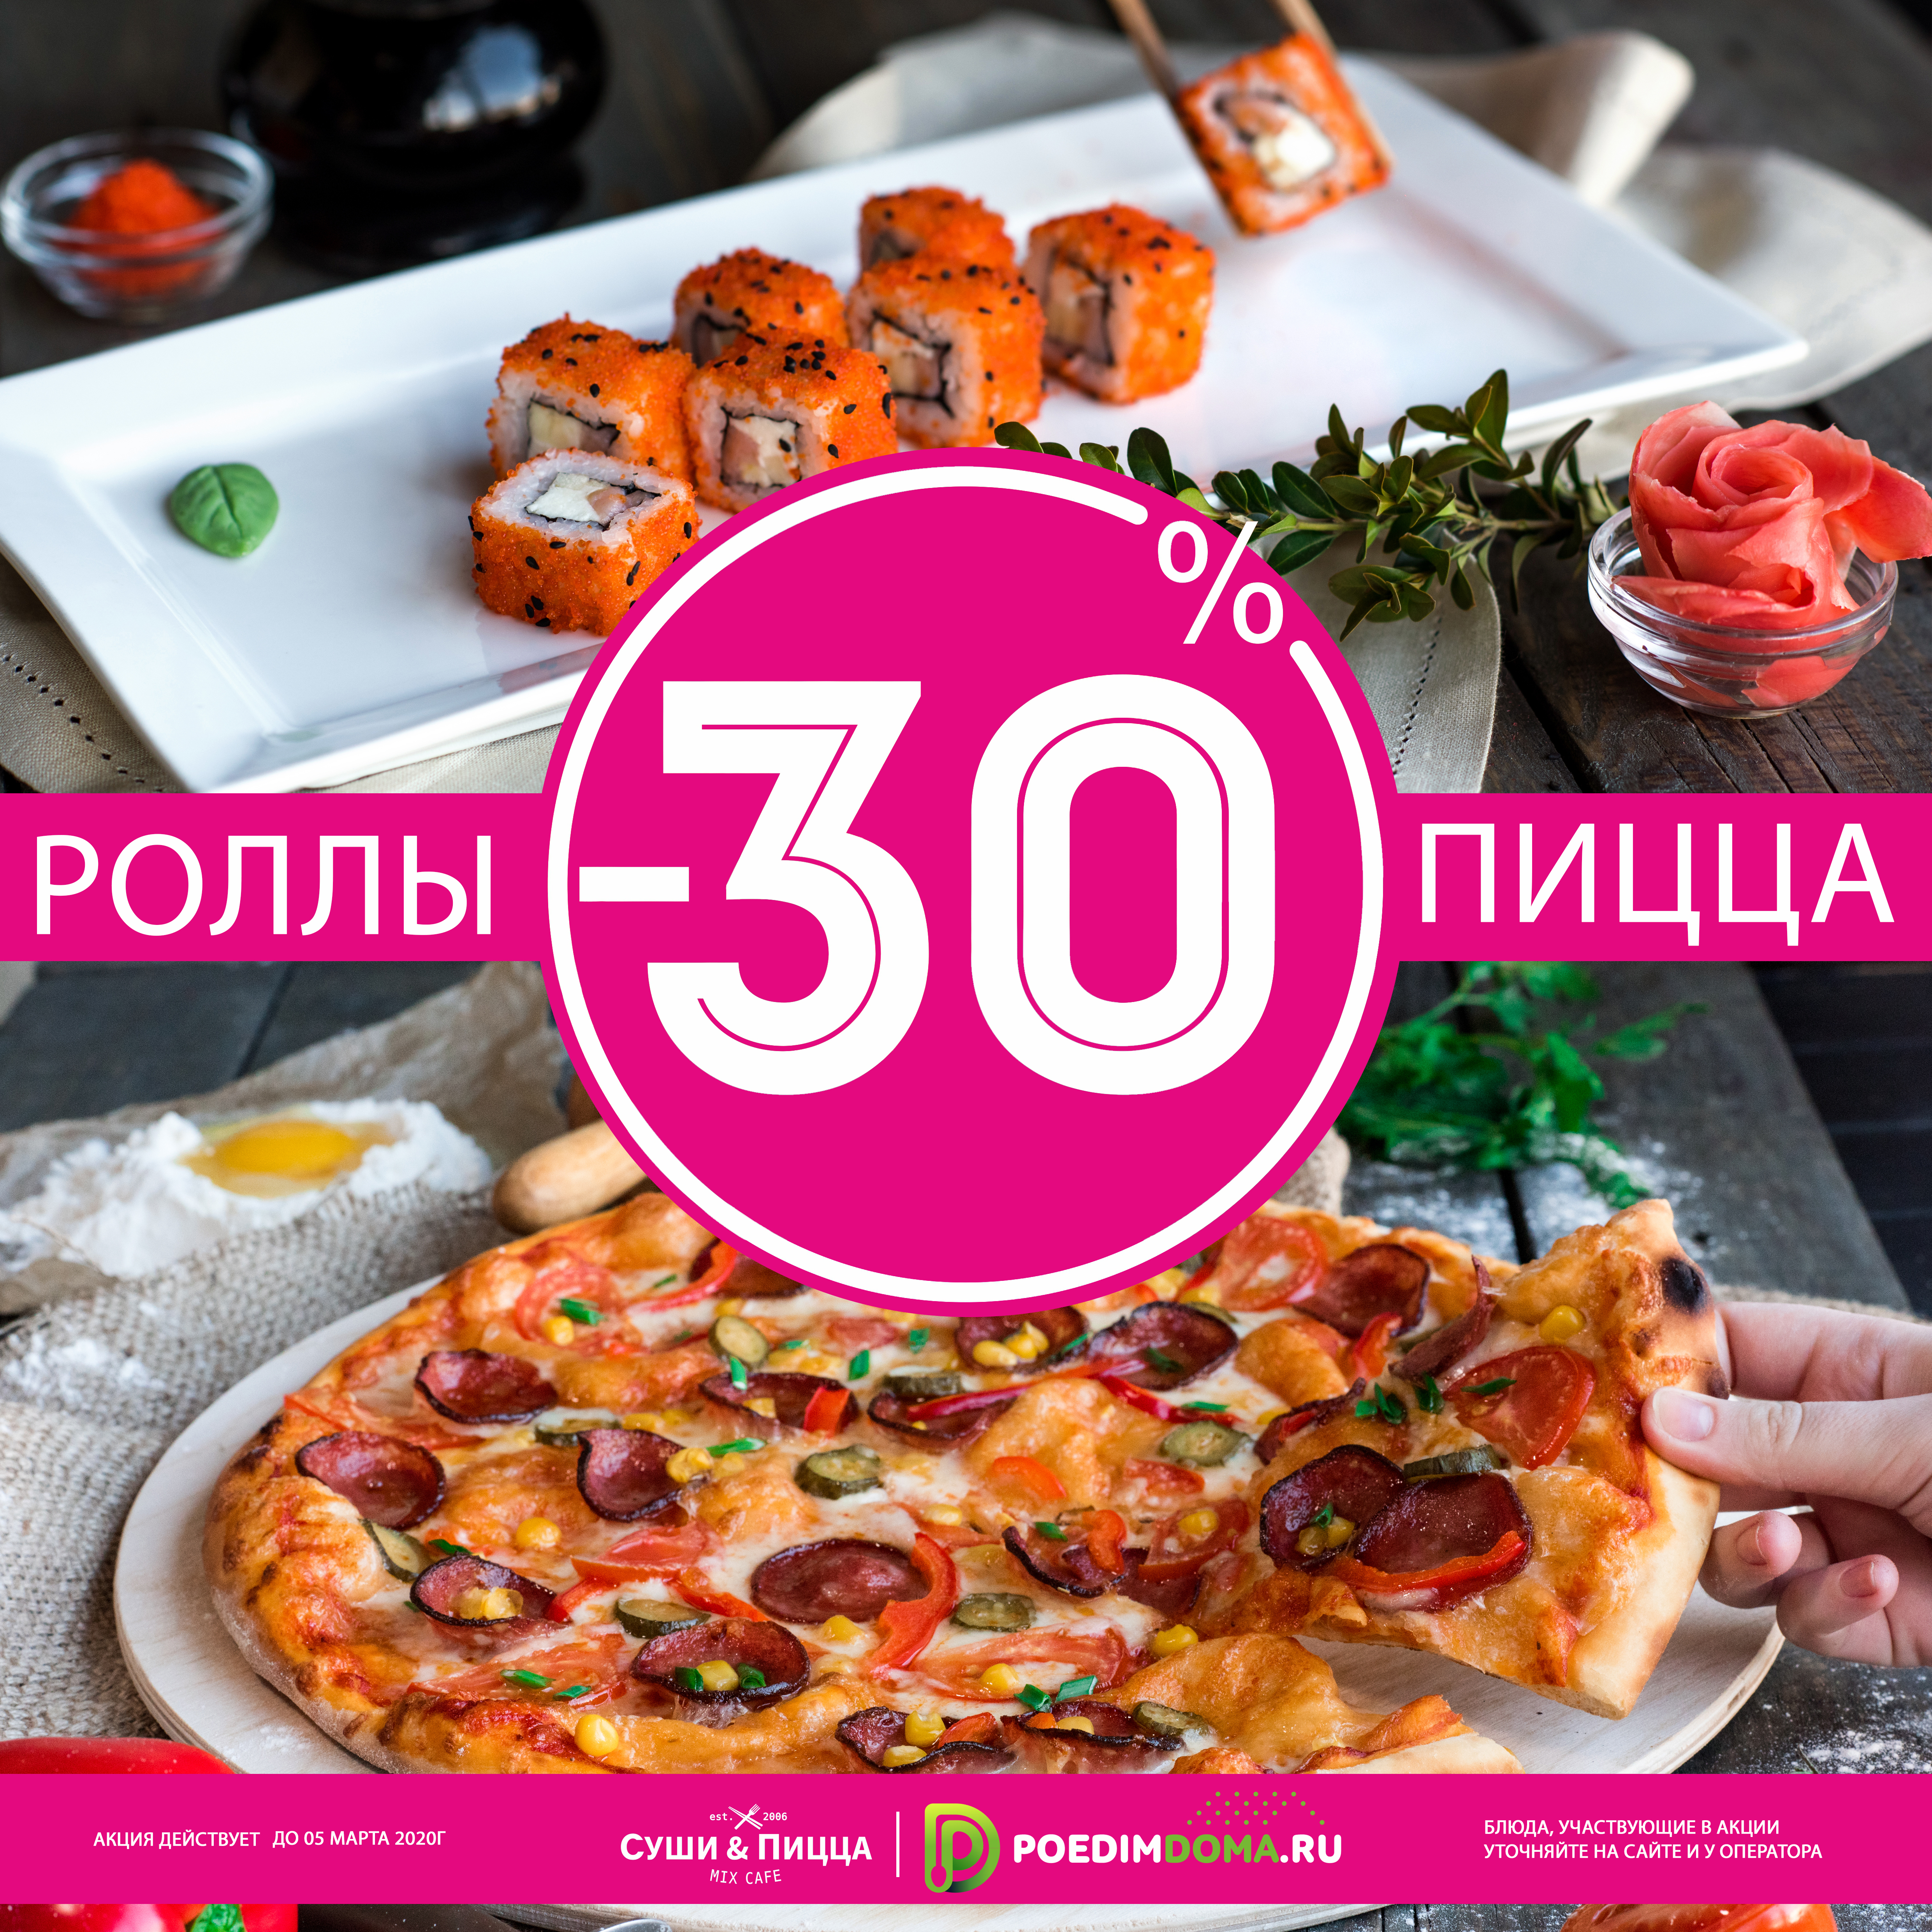 Фото СКИДКИ -30% на роллы и пиццу  до 05 марта 2020 г.